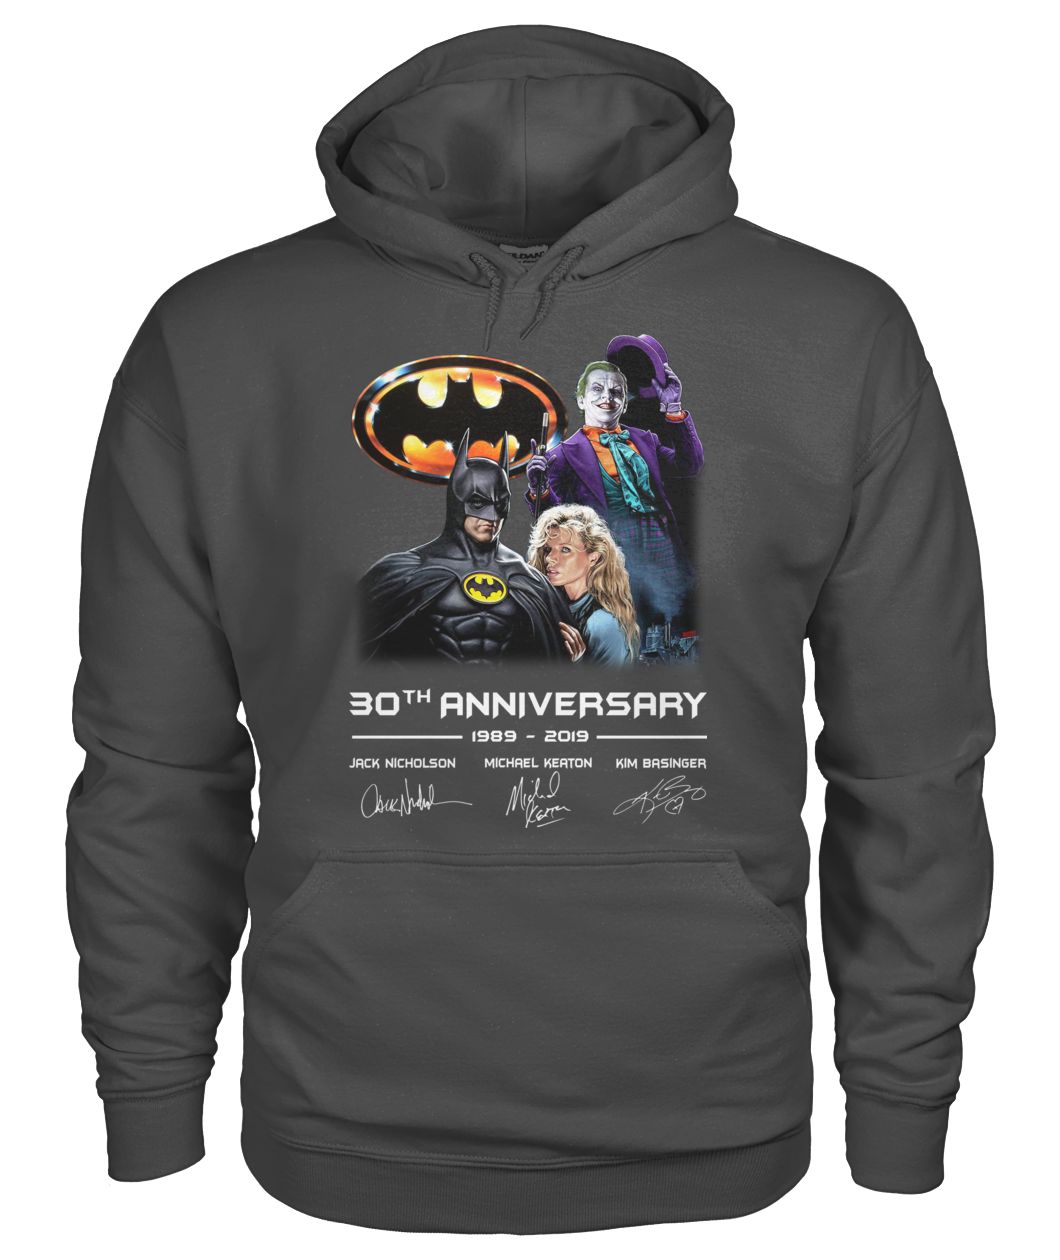 30th anniversary to batman 1989-2019 signatures gildan hoodie